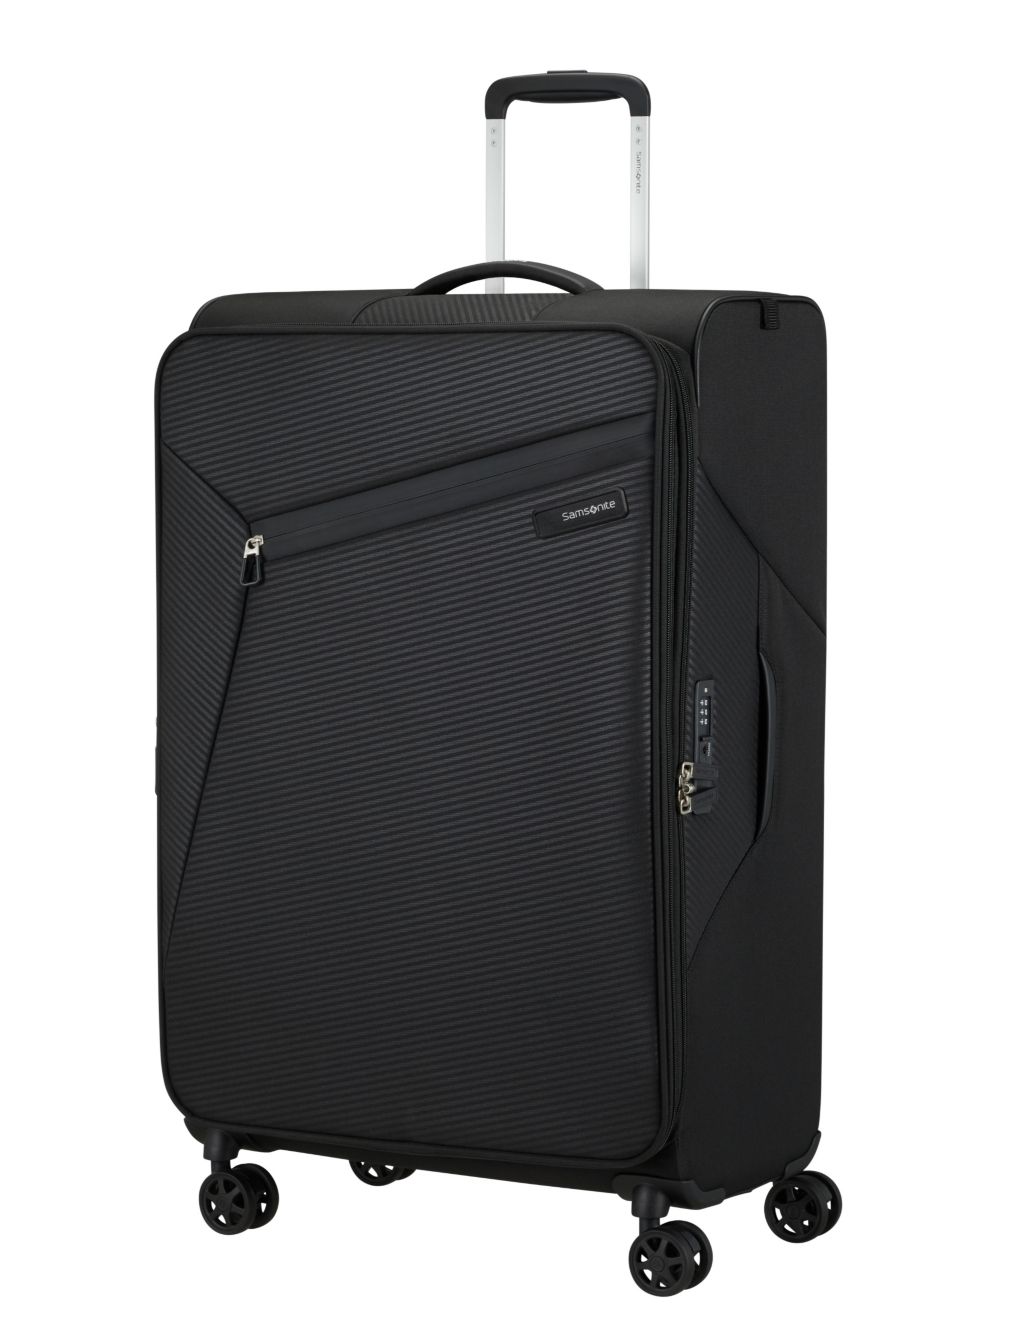 Litebeam 4 Wheel Soft Large Suitcase